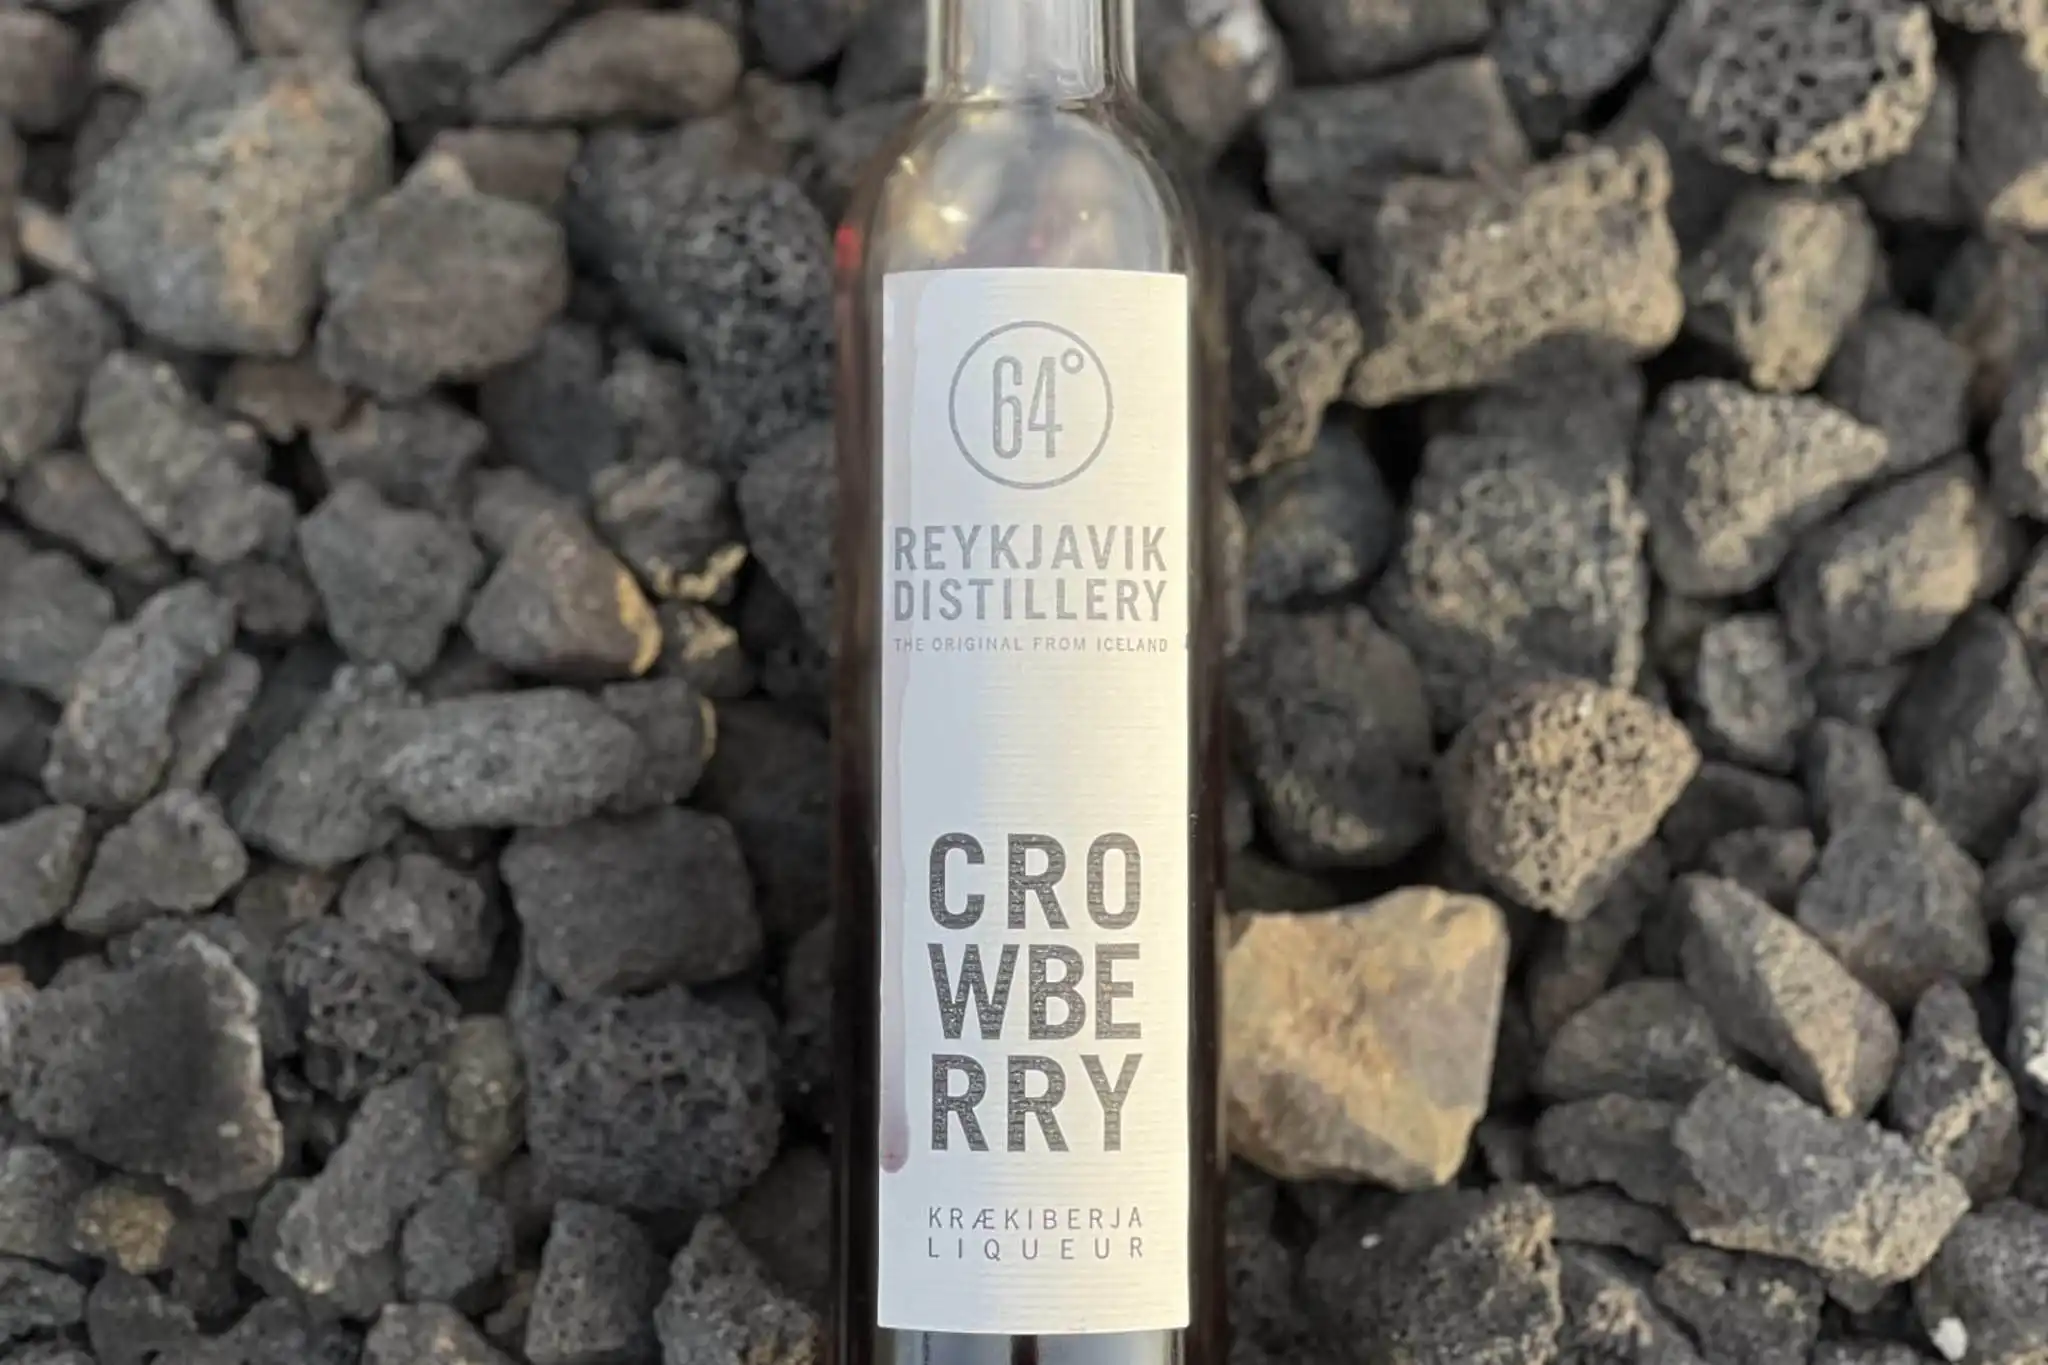 Crowberry Liqueur from Reykjavik Distillery in Iceland